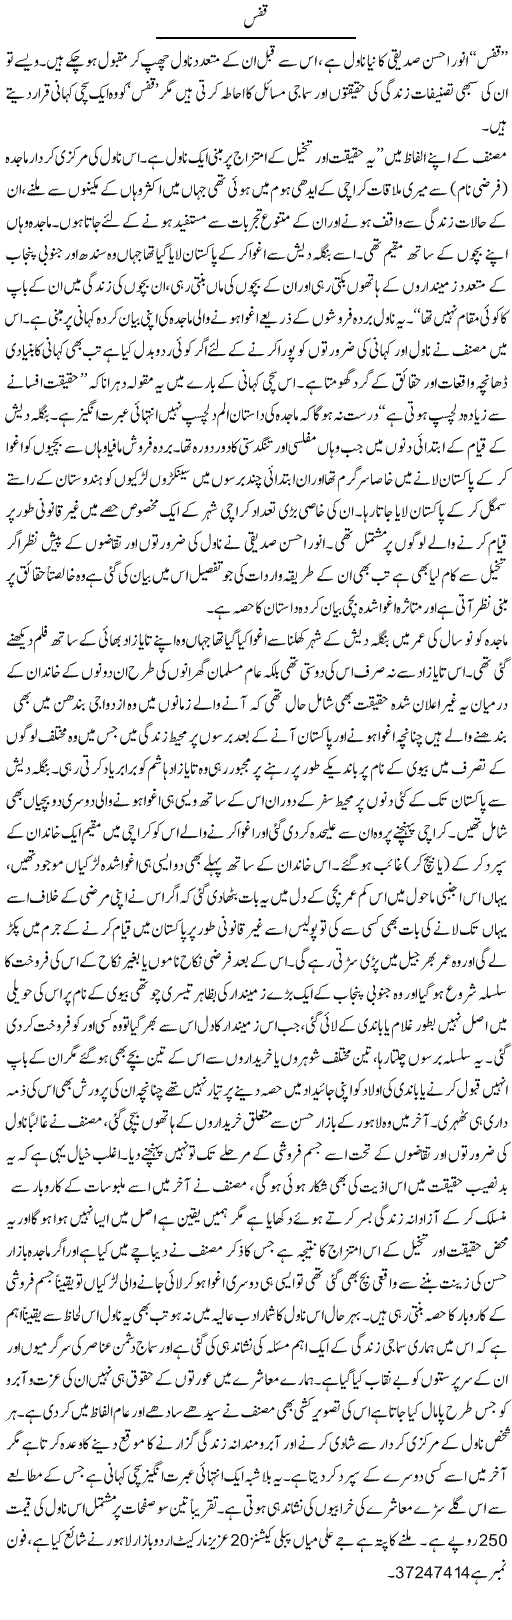 Faqs Novel Express Column Hameed Akhtar 23 November 2010